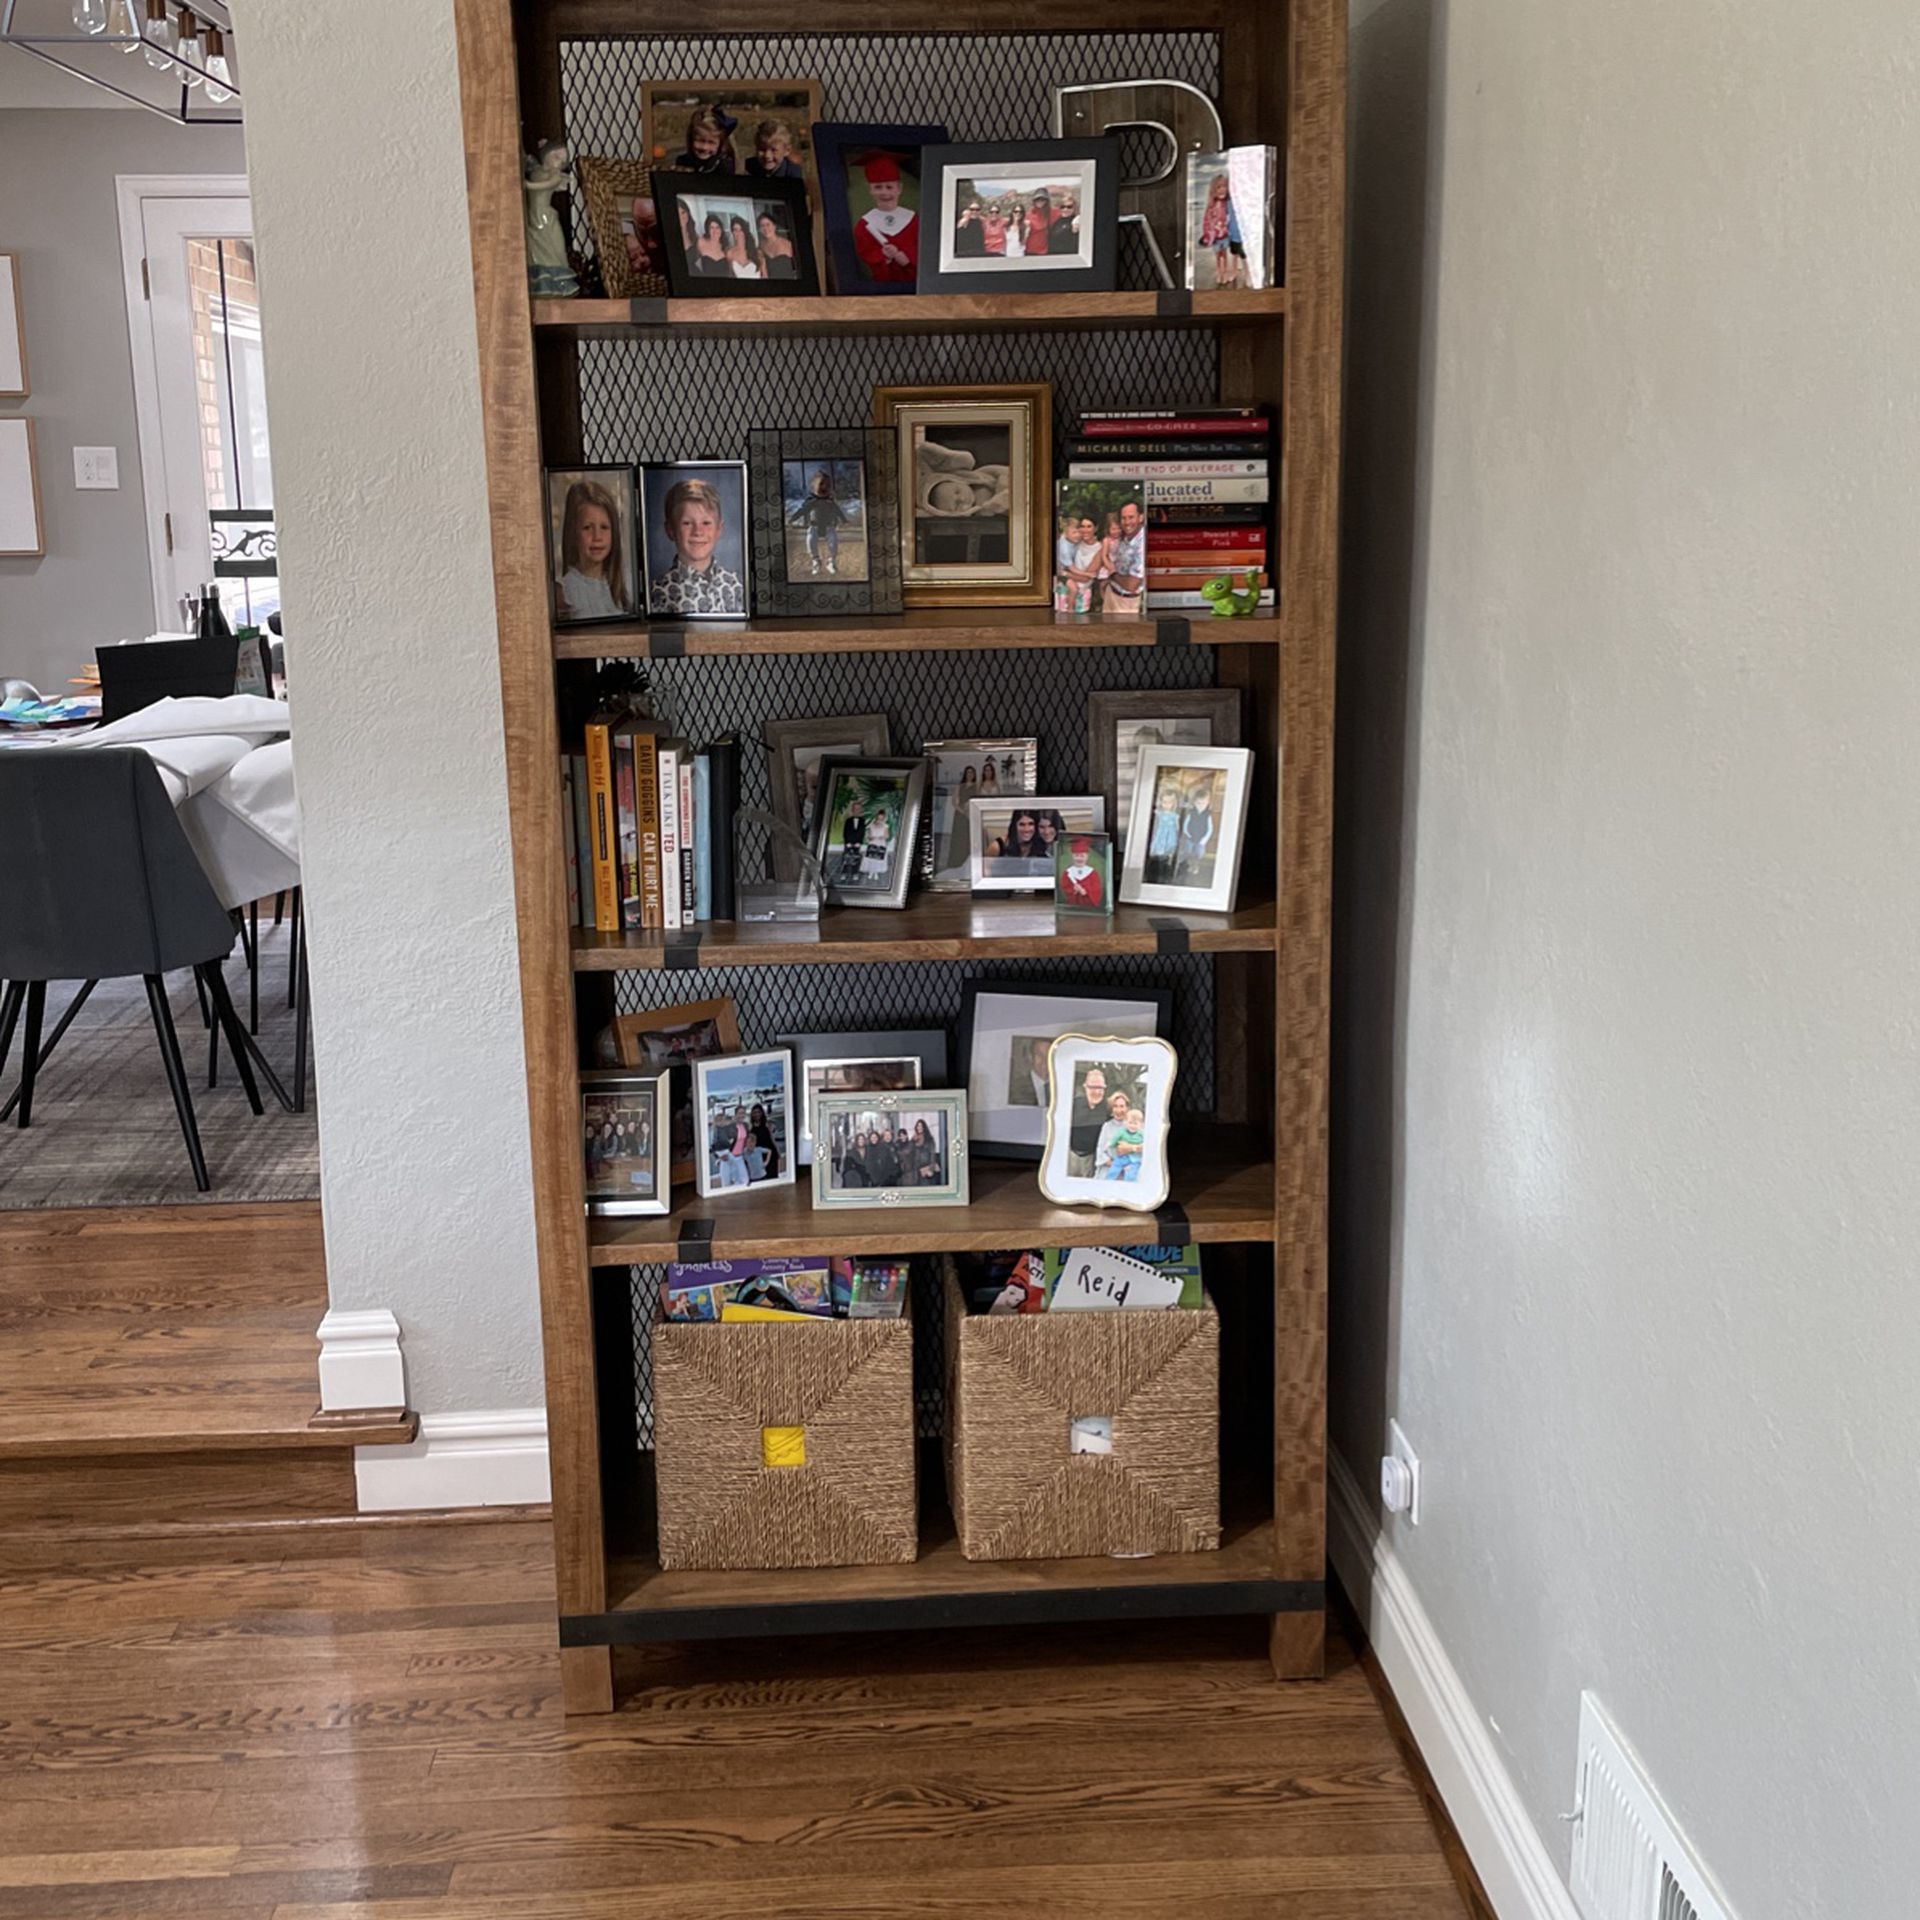 Wooden Bookshelf 